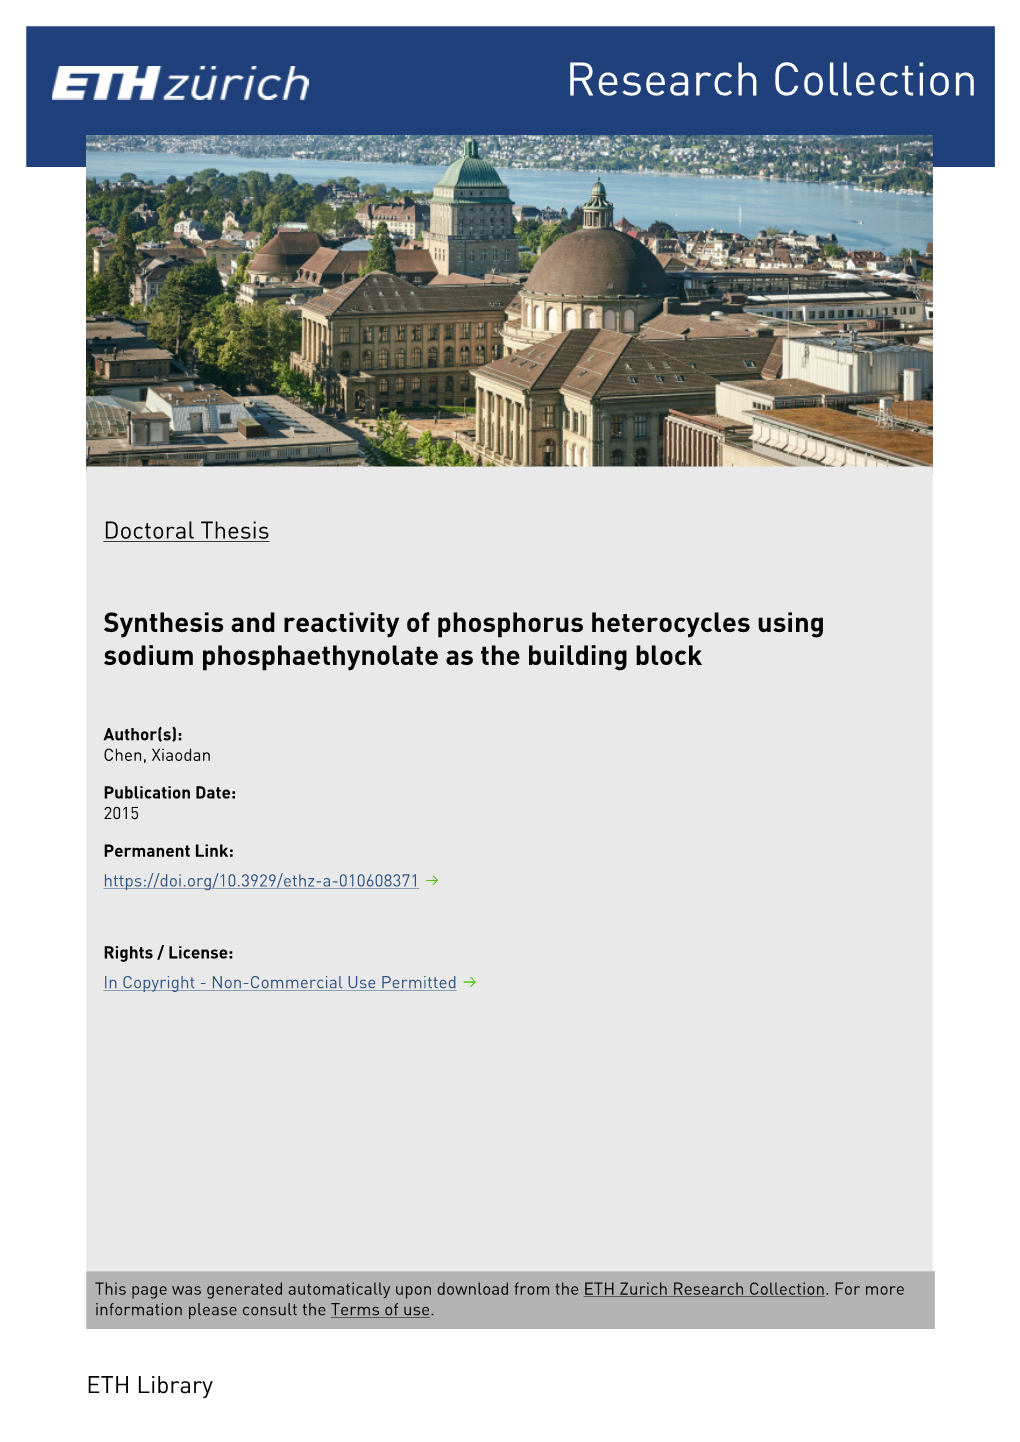 Synthesis and Reactivity of Phosphorus Heterocycles Using Sodium Phosphaethynolate As the Building Block